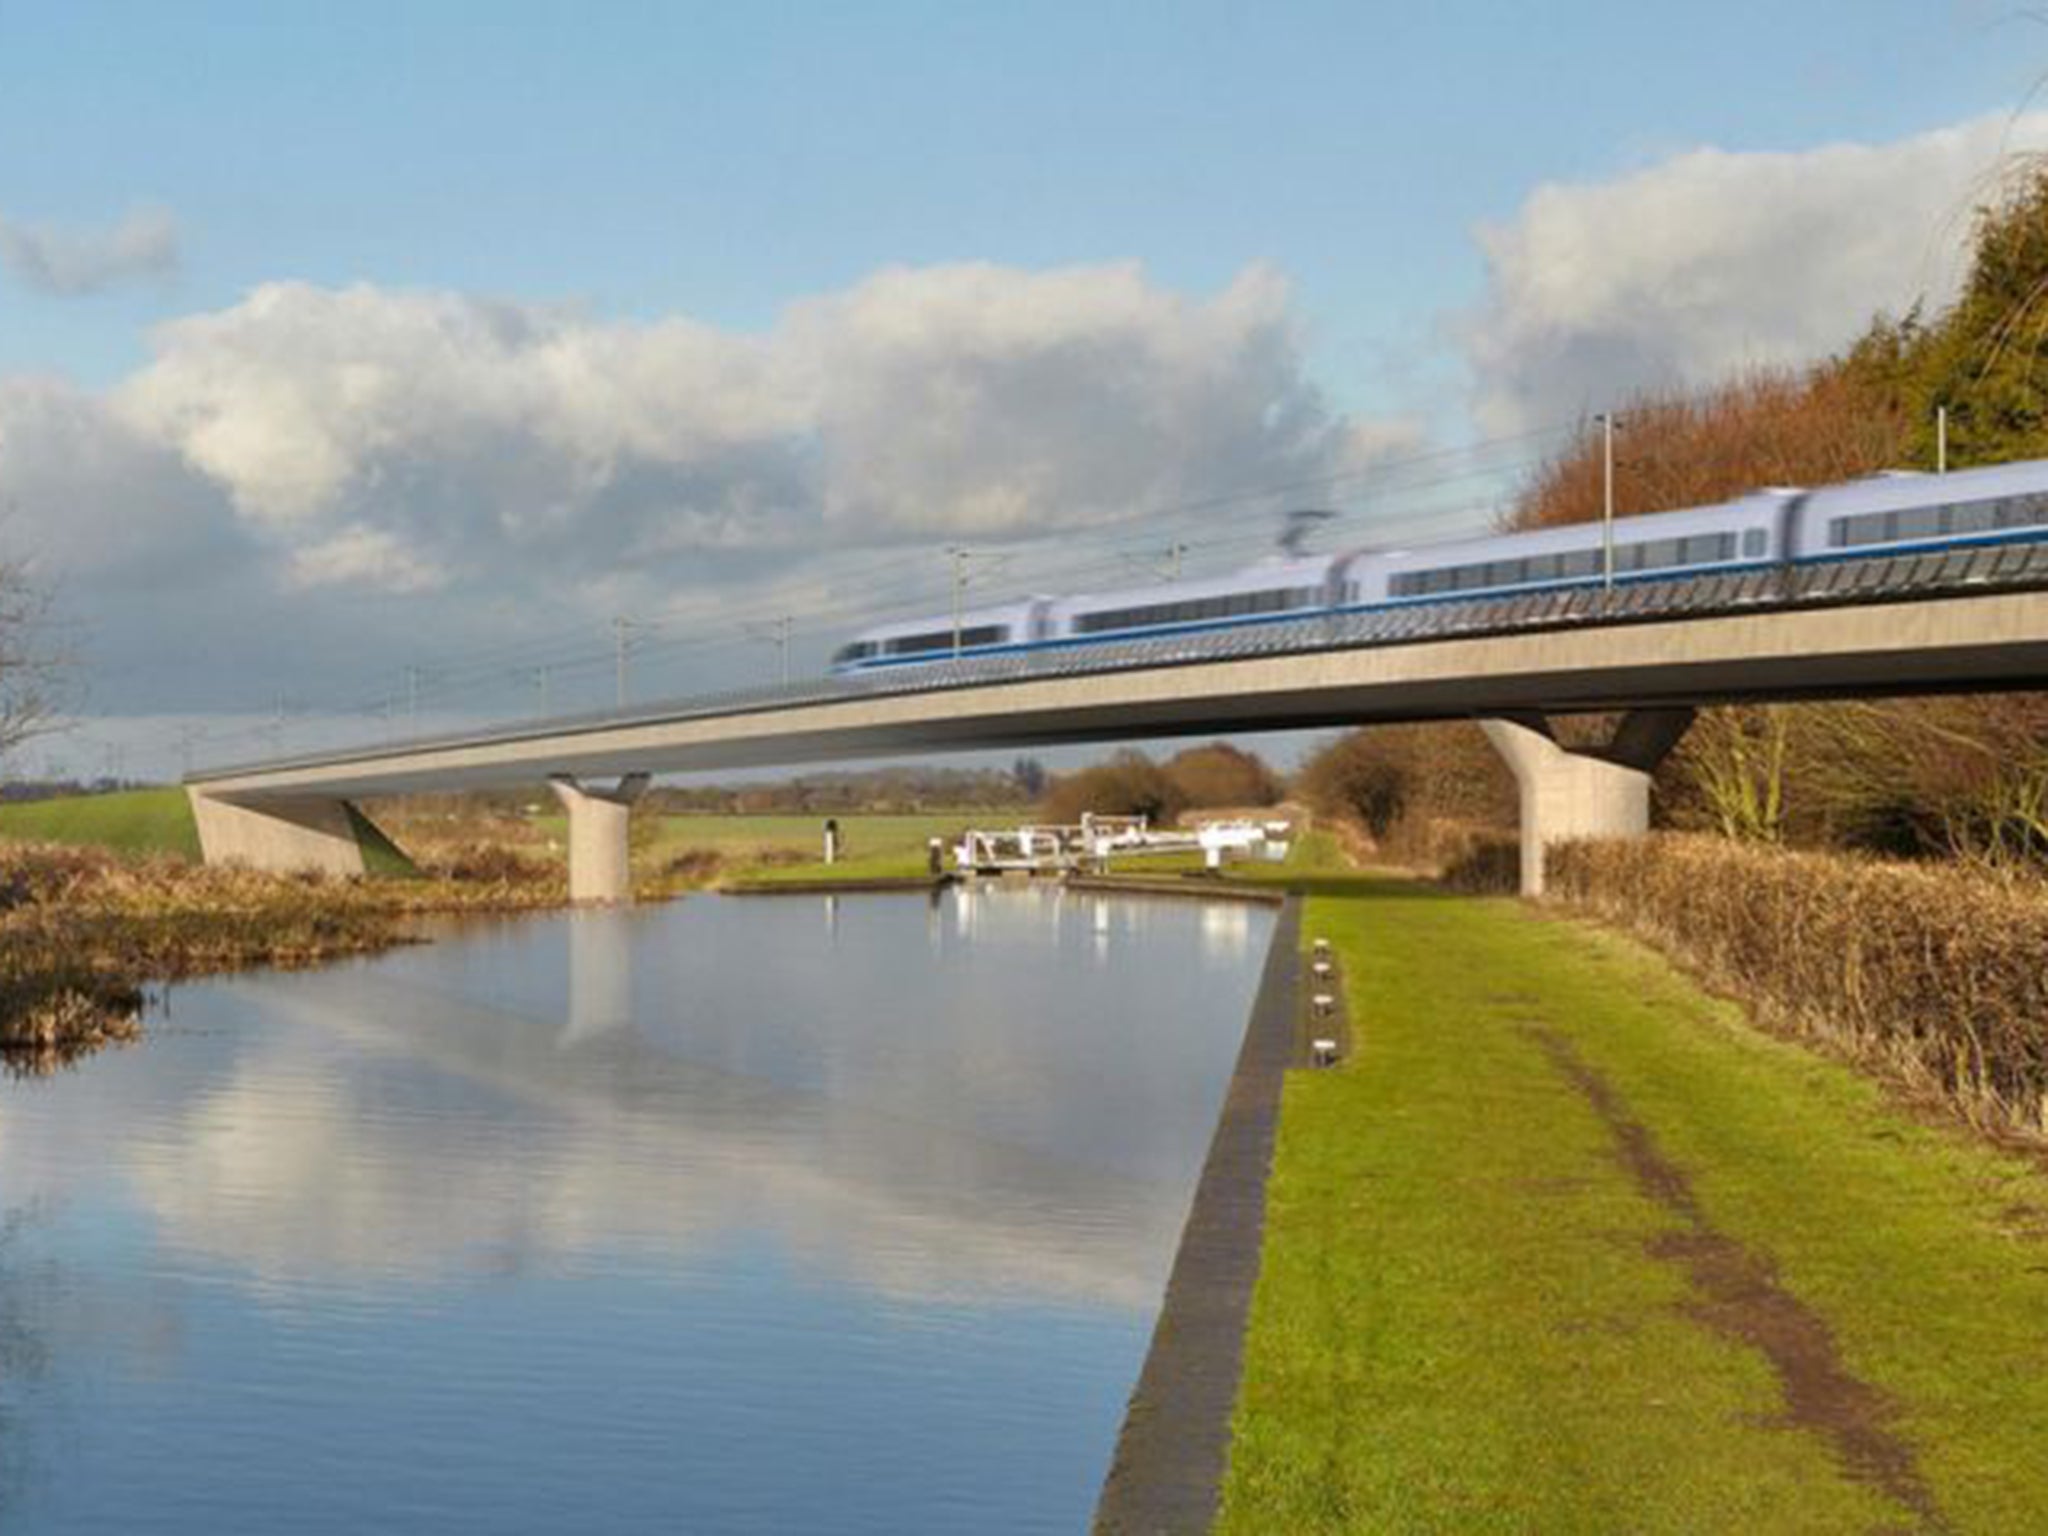 An HS2 train crosses a viaduct near Birmingham, in this artist’s impression